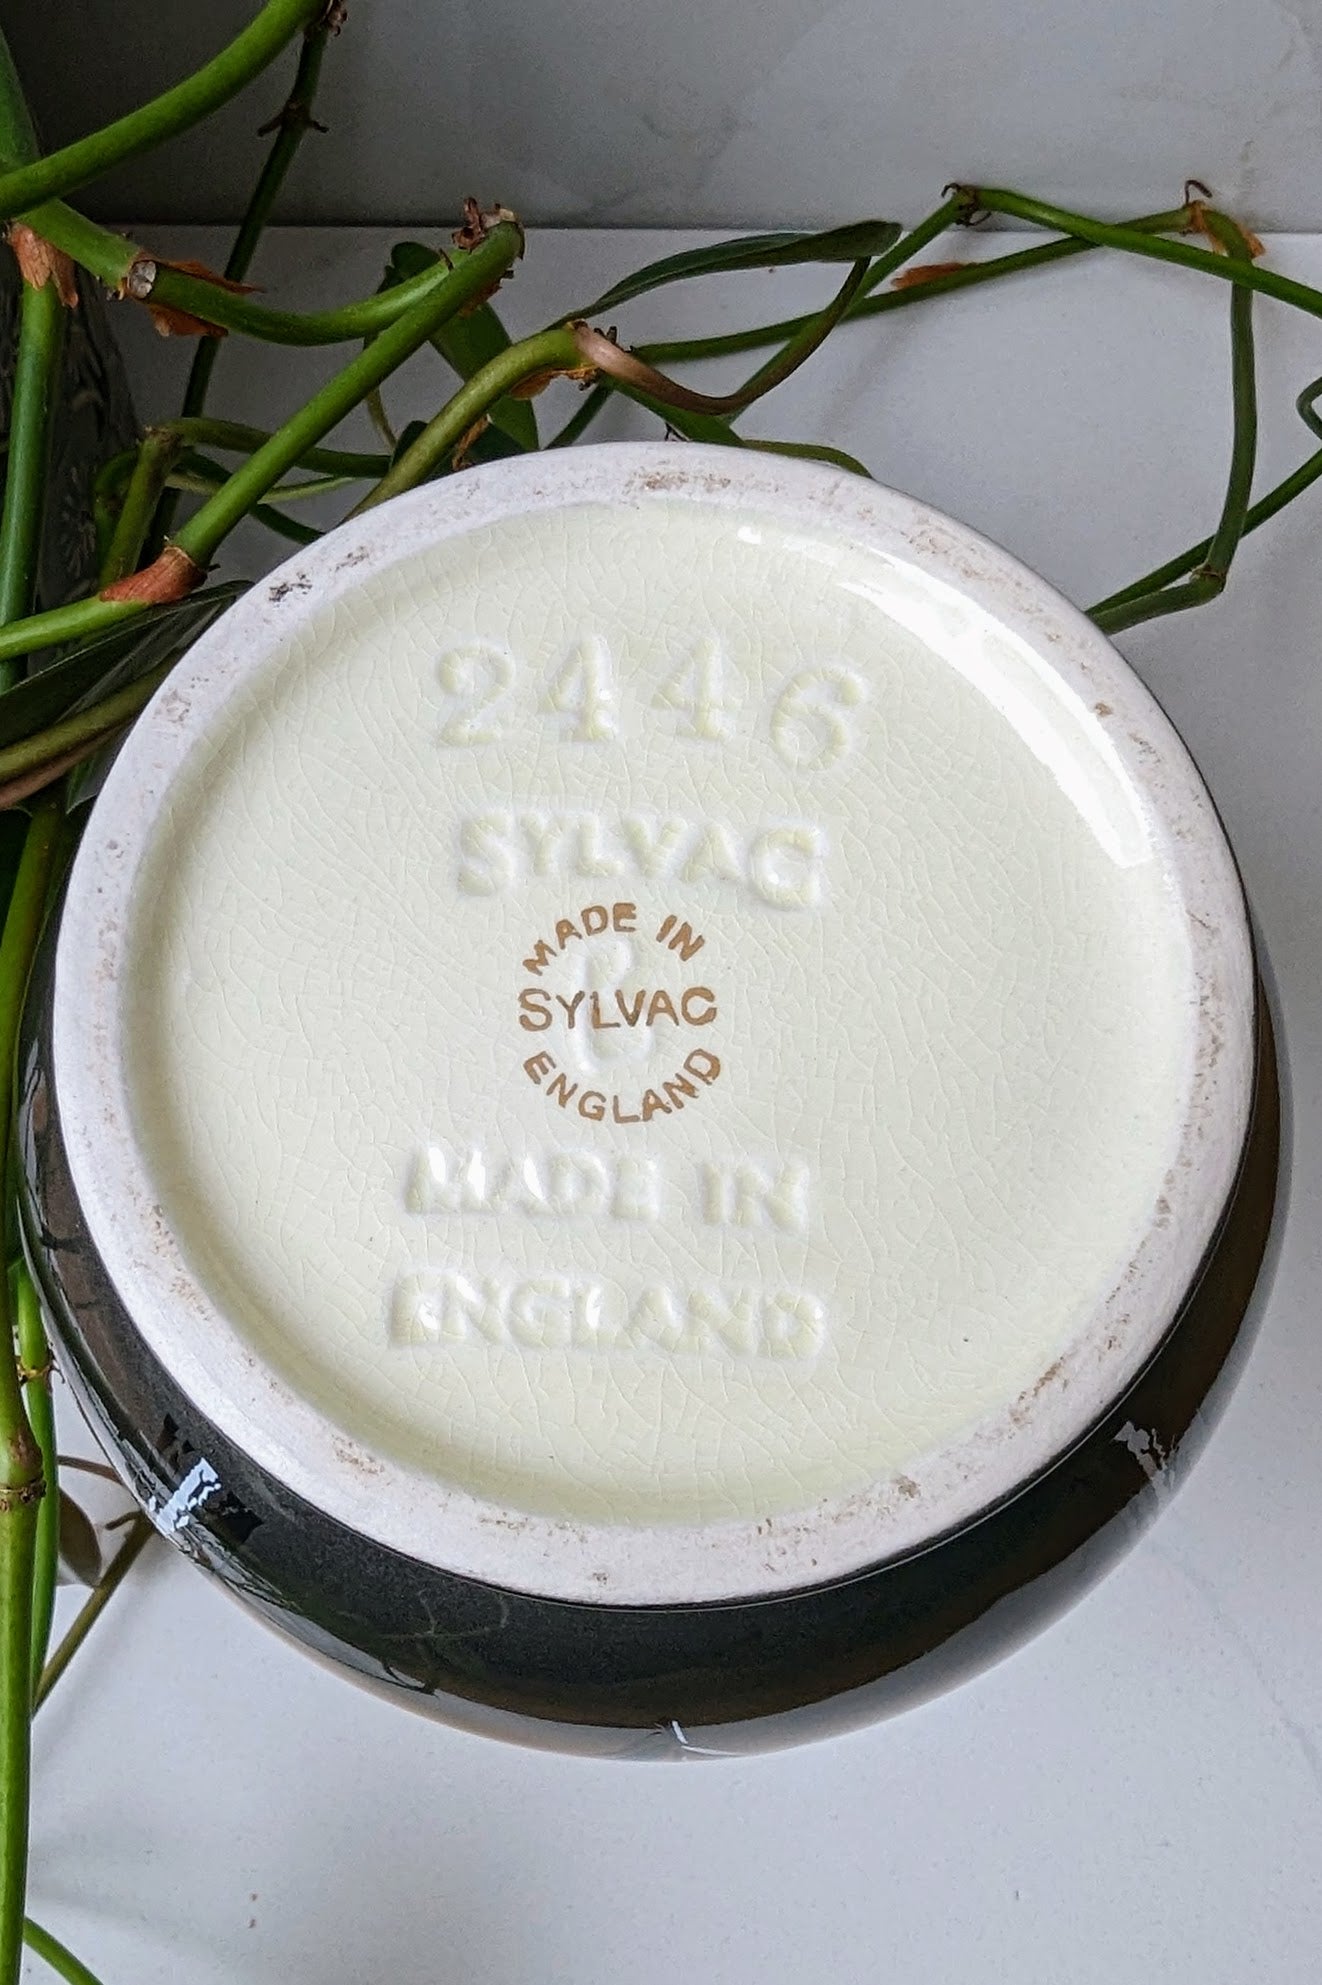 Sylvac made in England mark on vase